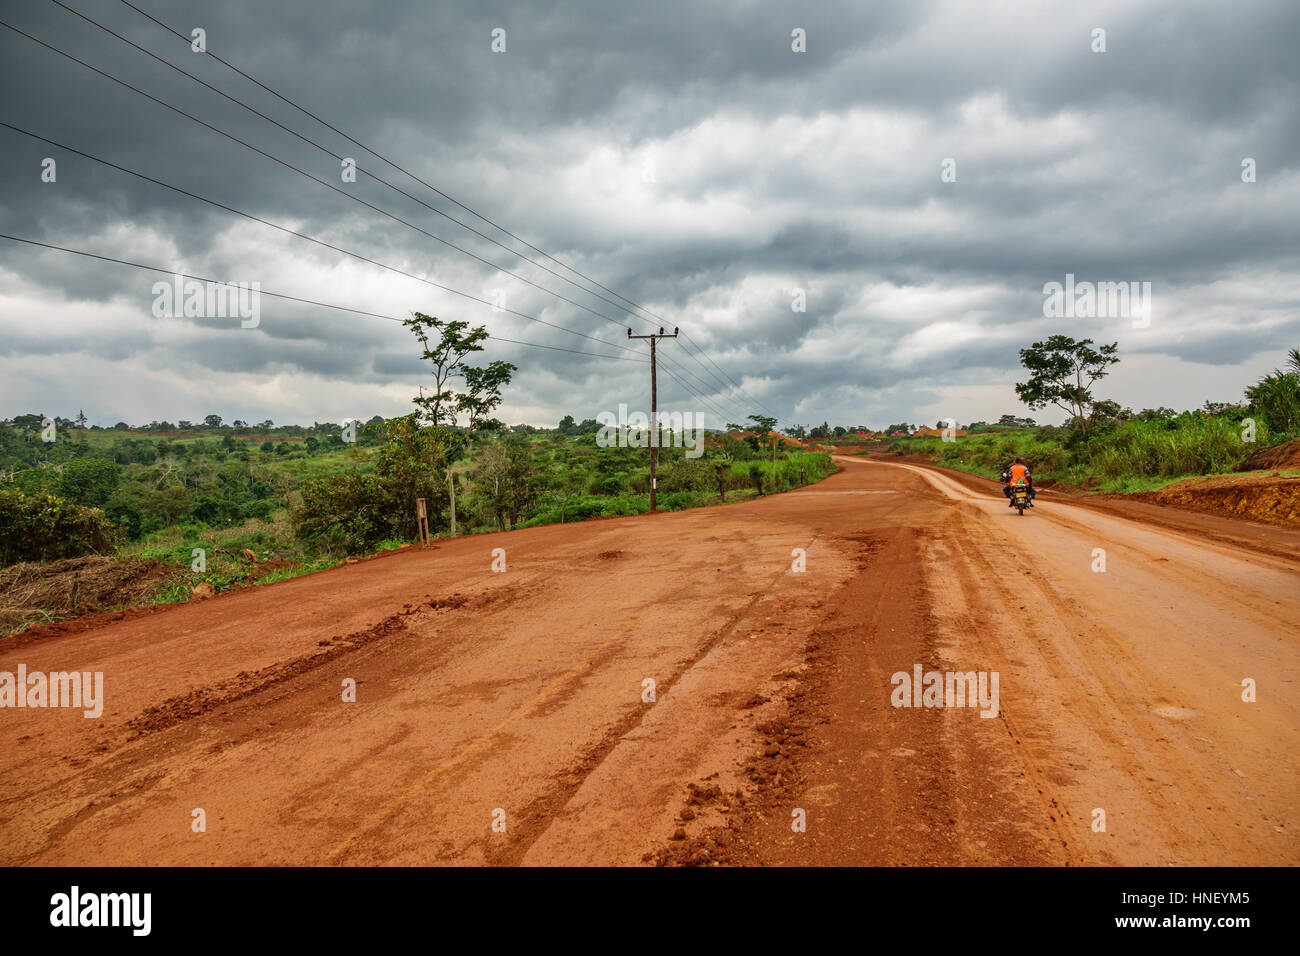 Uganda-Straße an einem bewölkten Tag Stockfoto